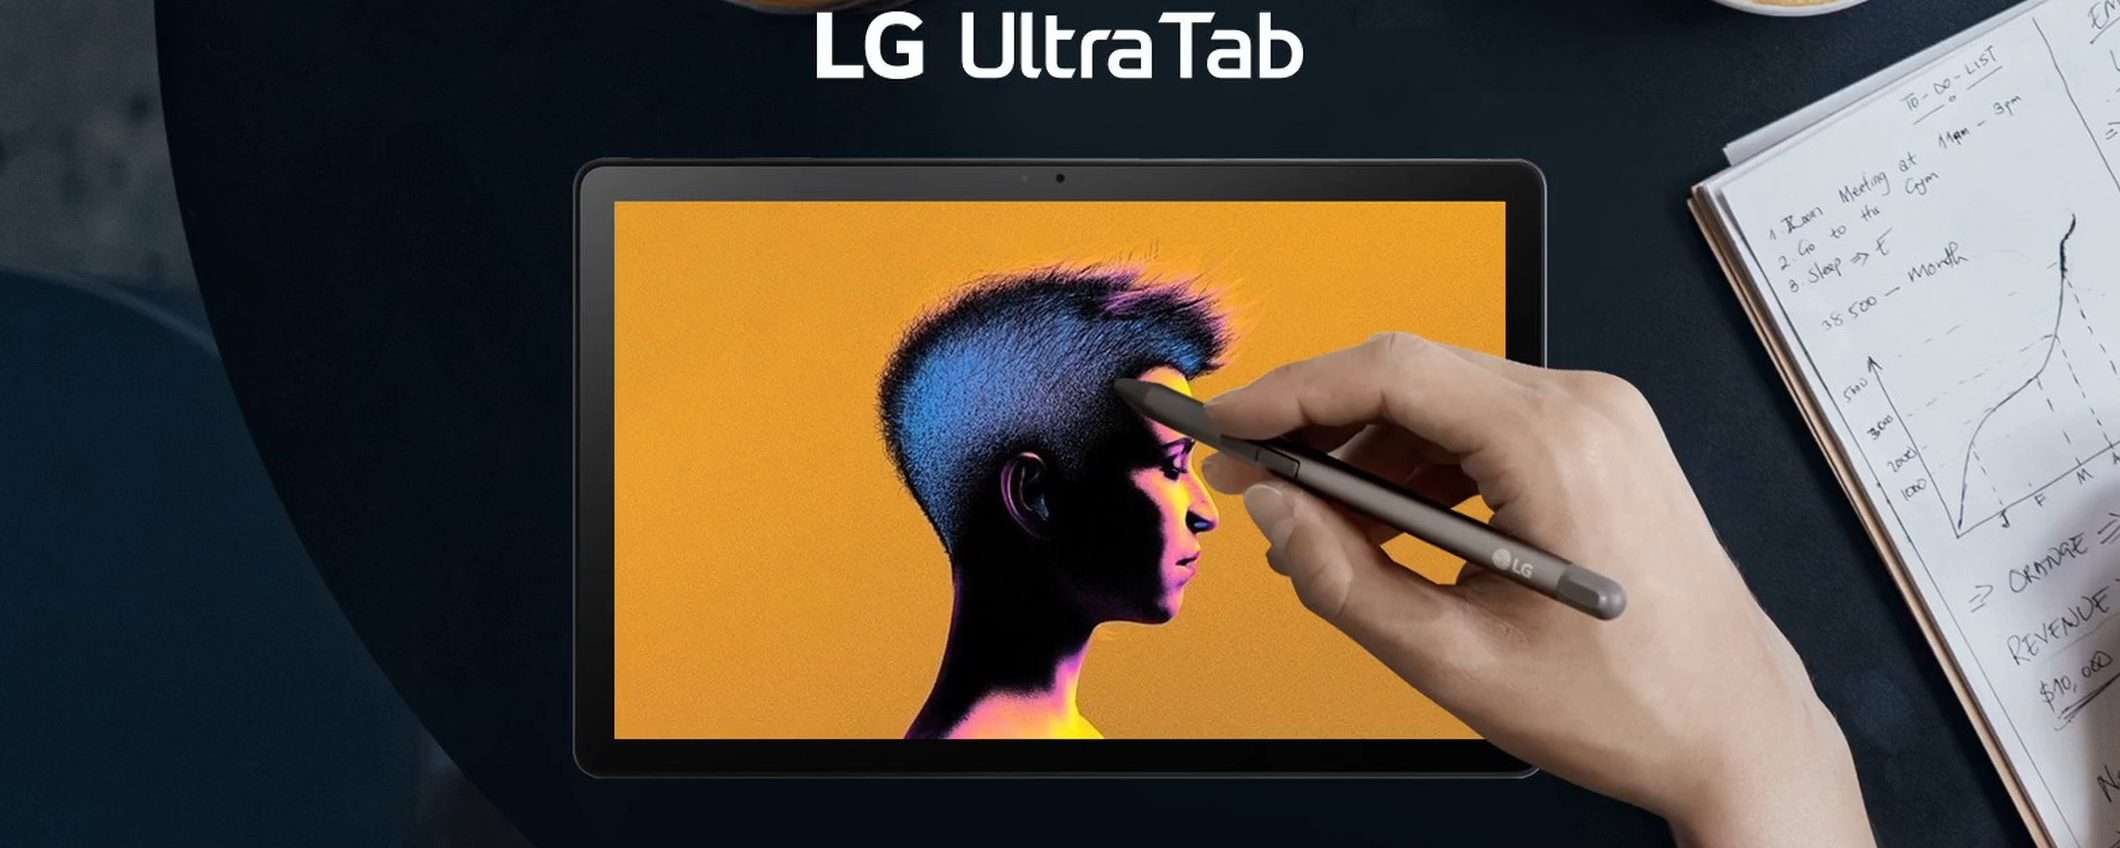 LG Ultra Tab: nuovo tablet con schermo 2K